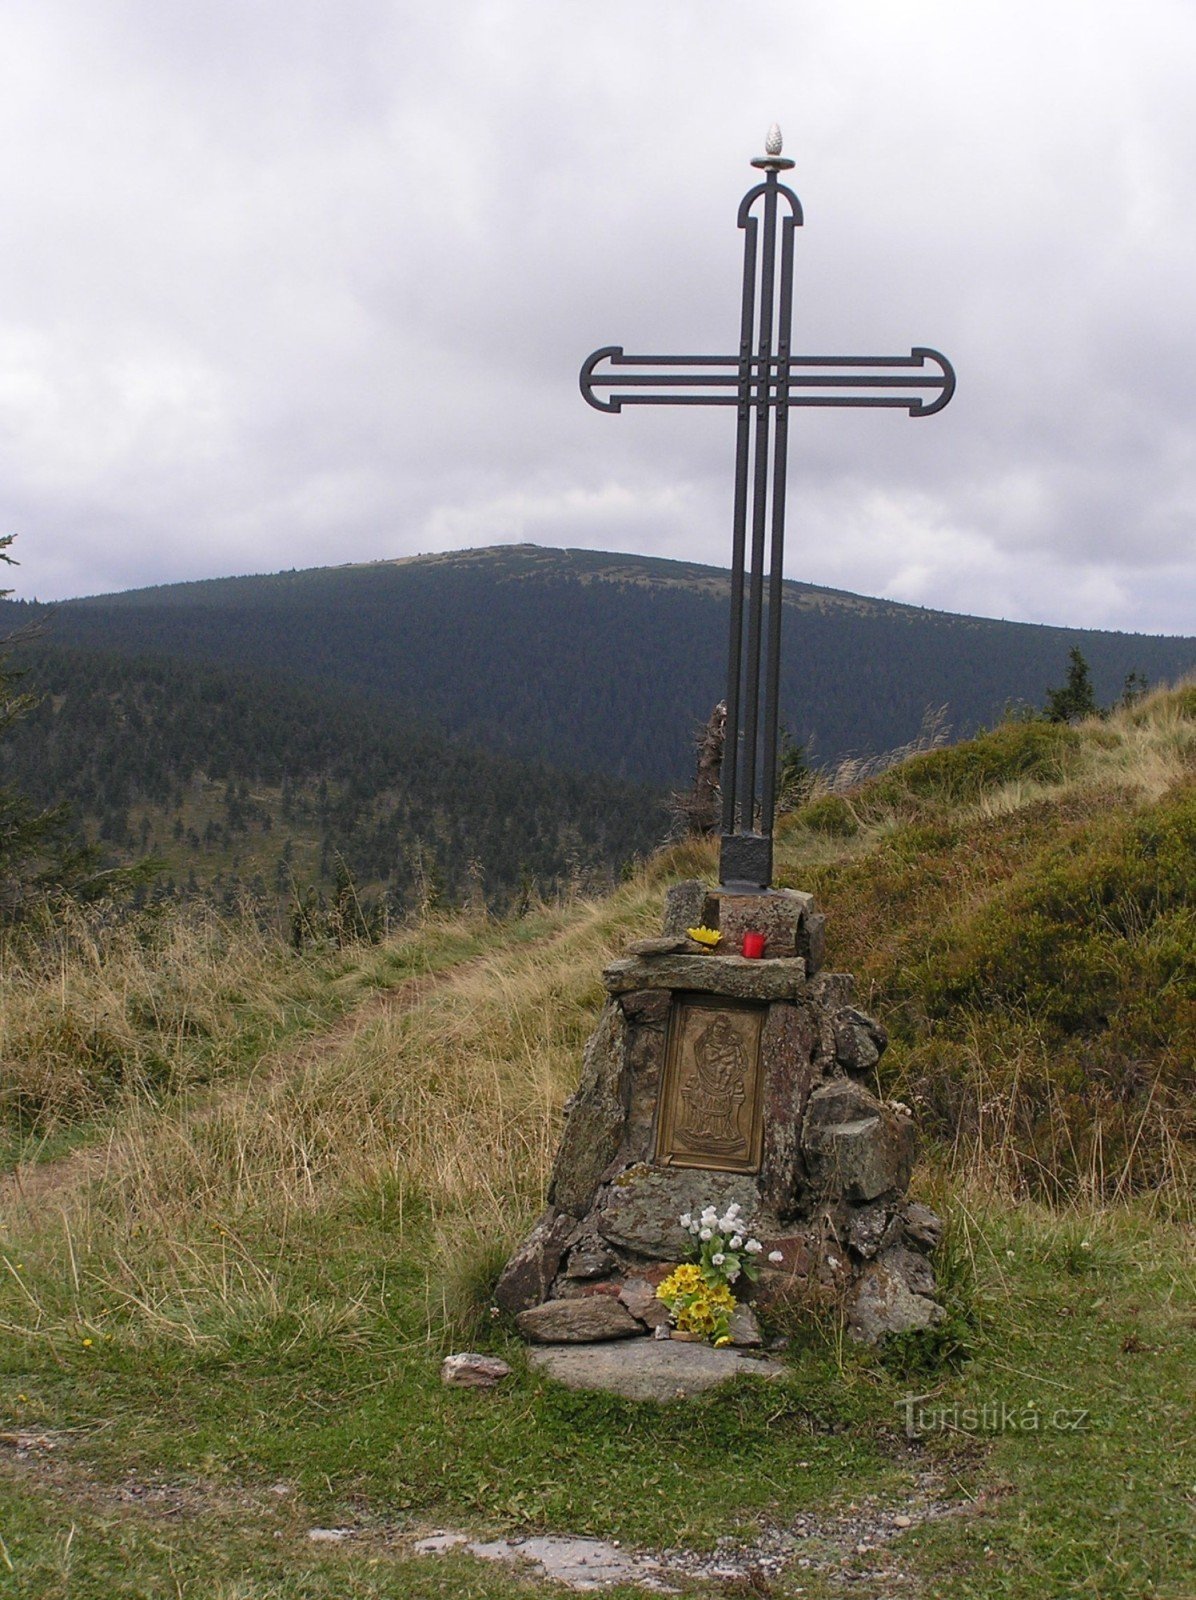 Il cross di Vřesová ben in secondo piano con Keprník